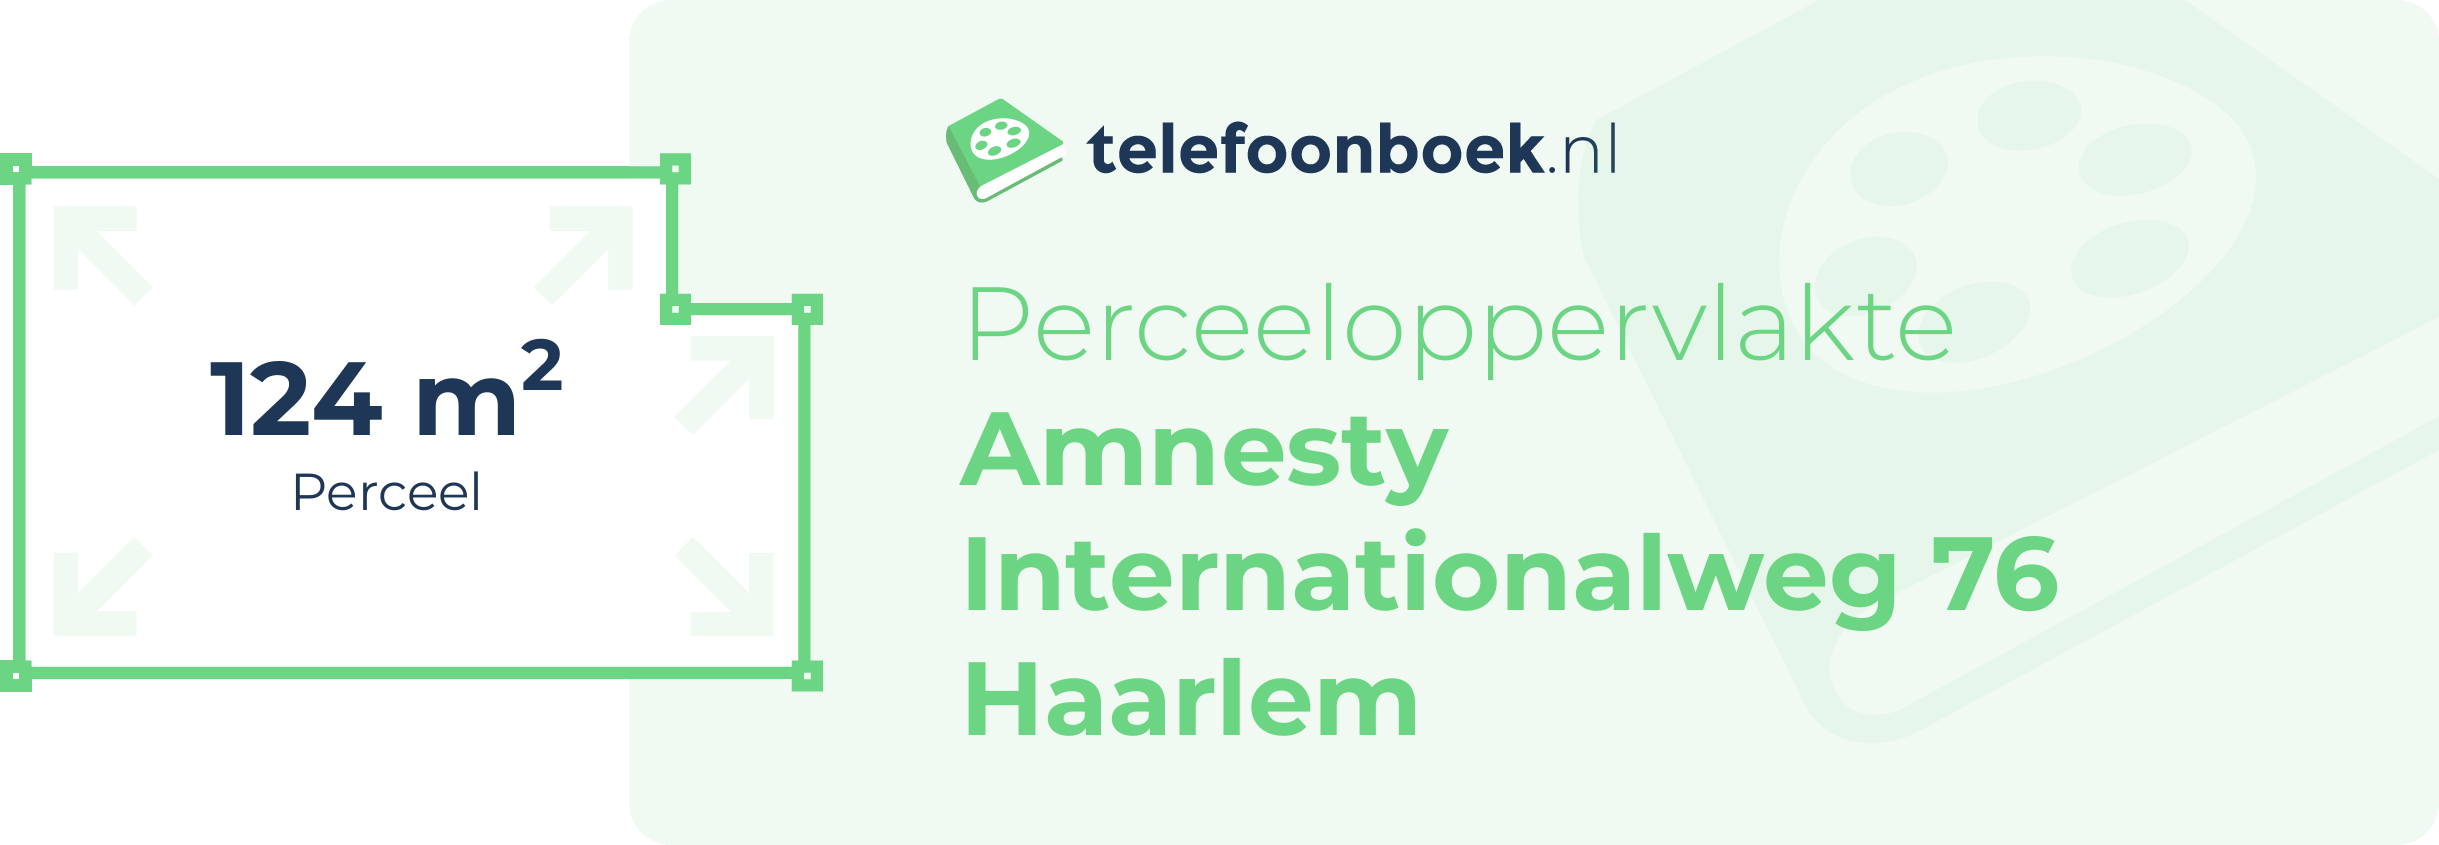 Perceeloppervlakte Amnesty Internationalweg 76 Haarlem